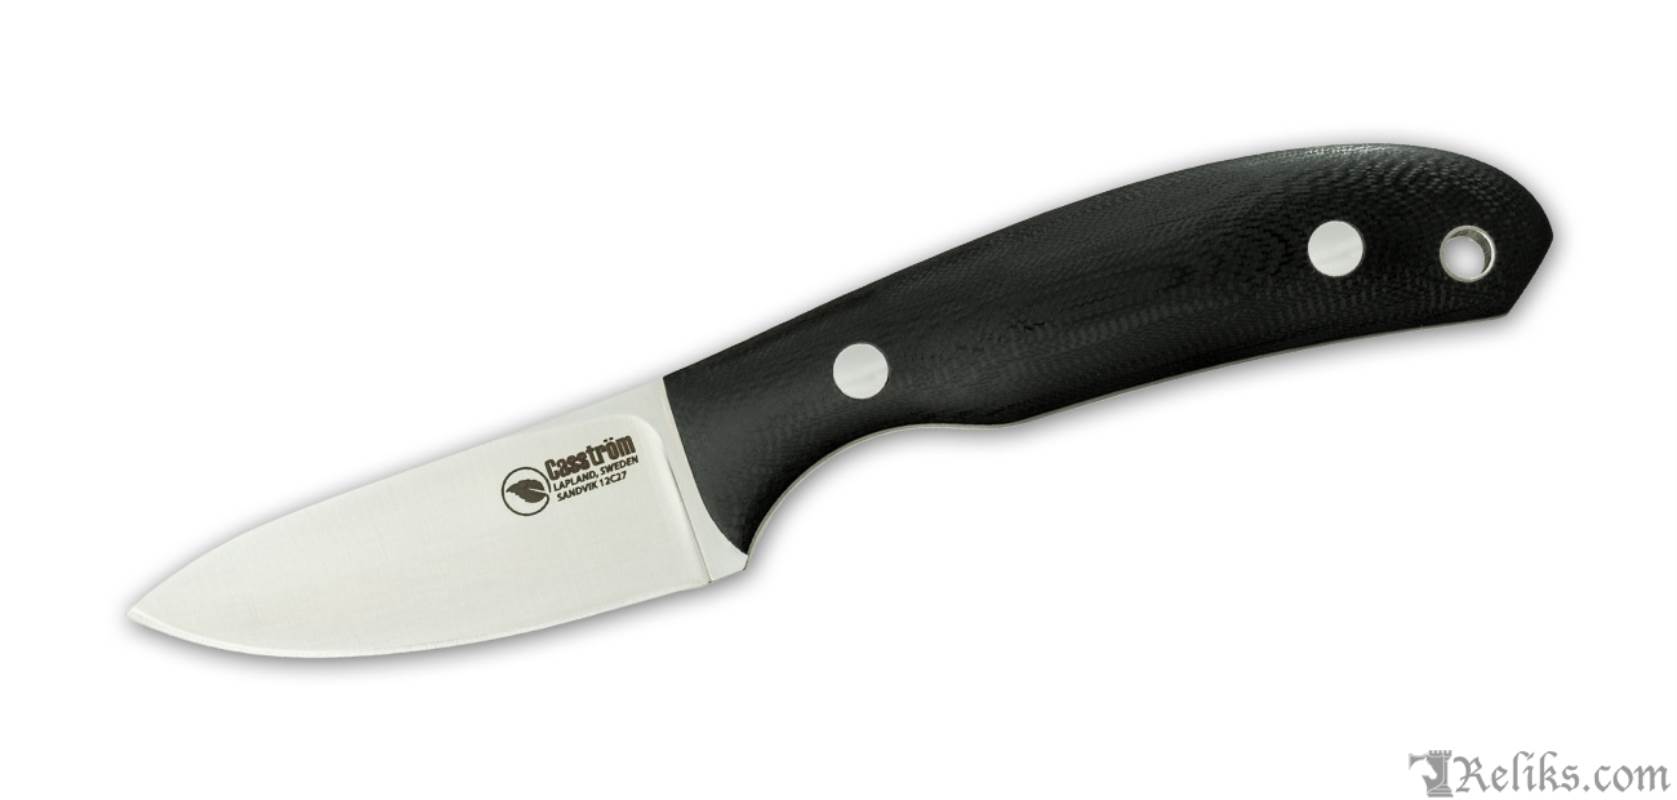 Casstrom Safari Knife